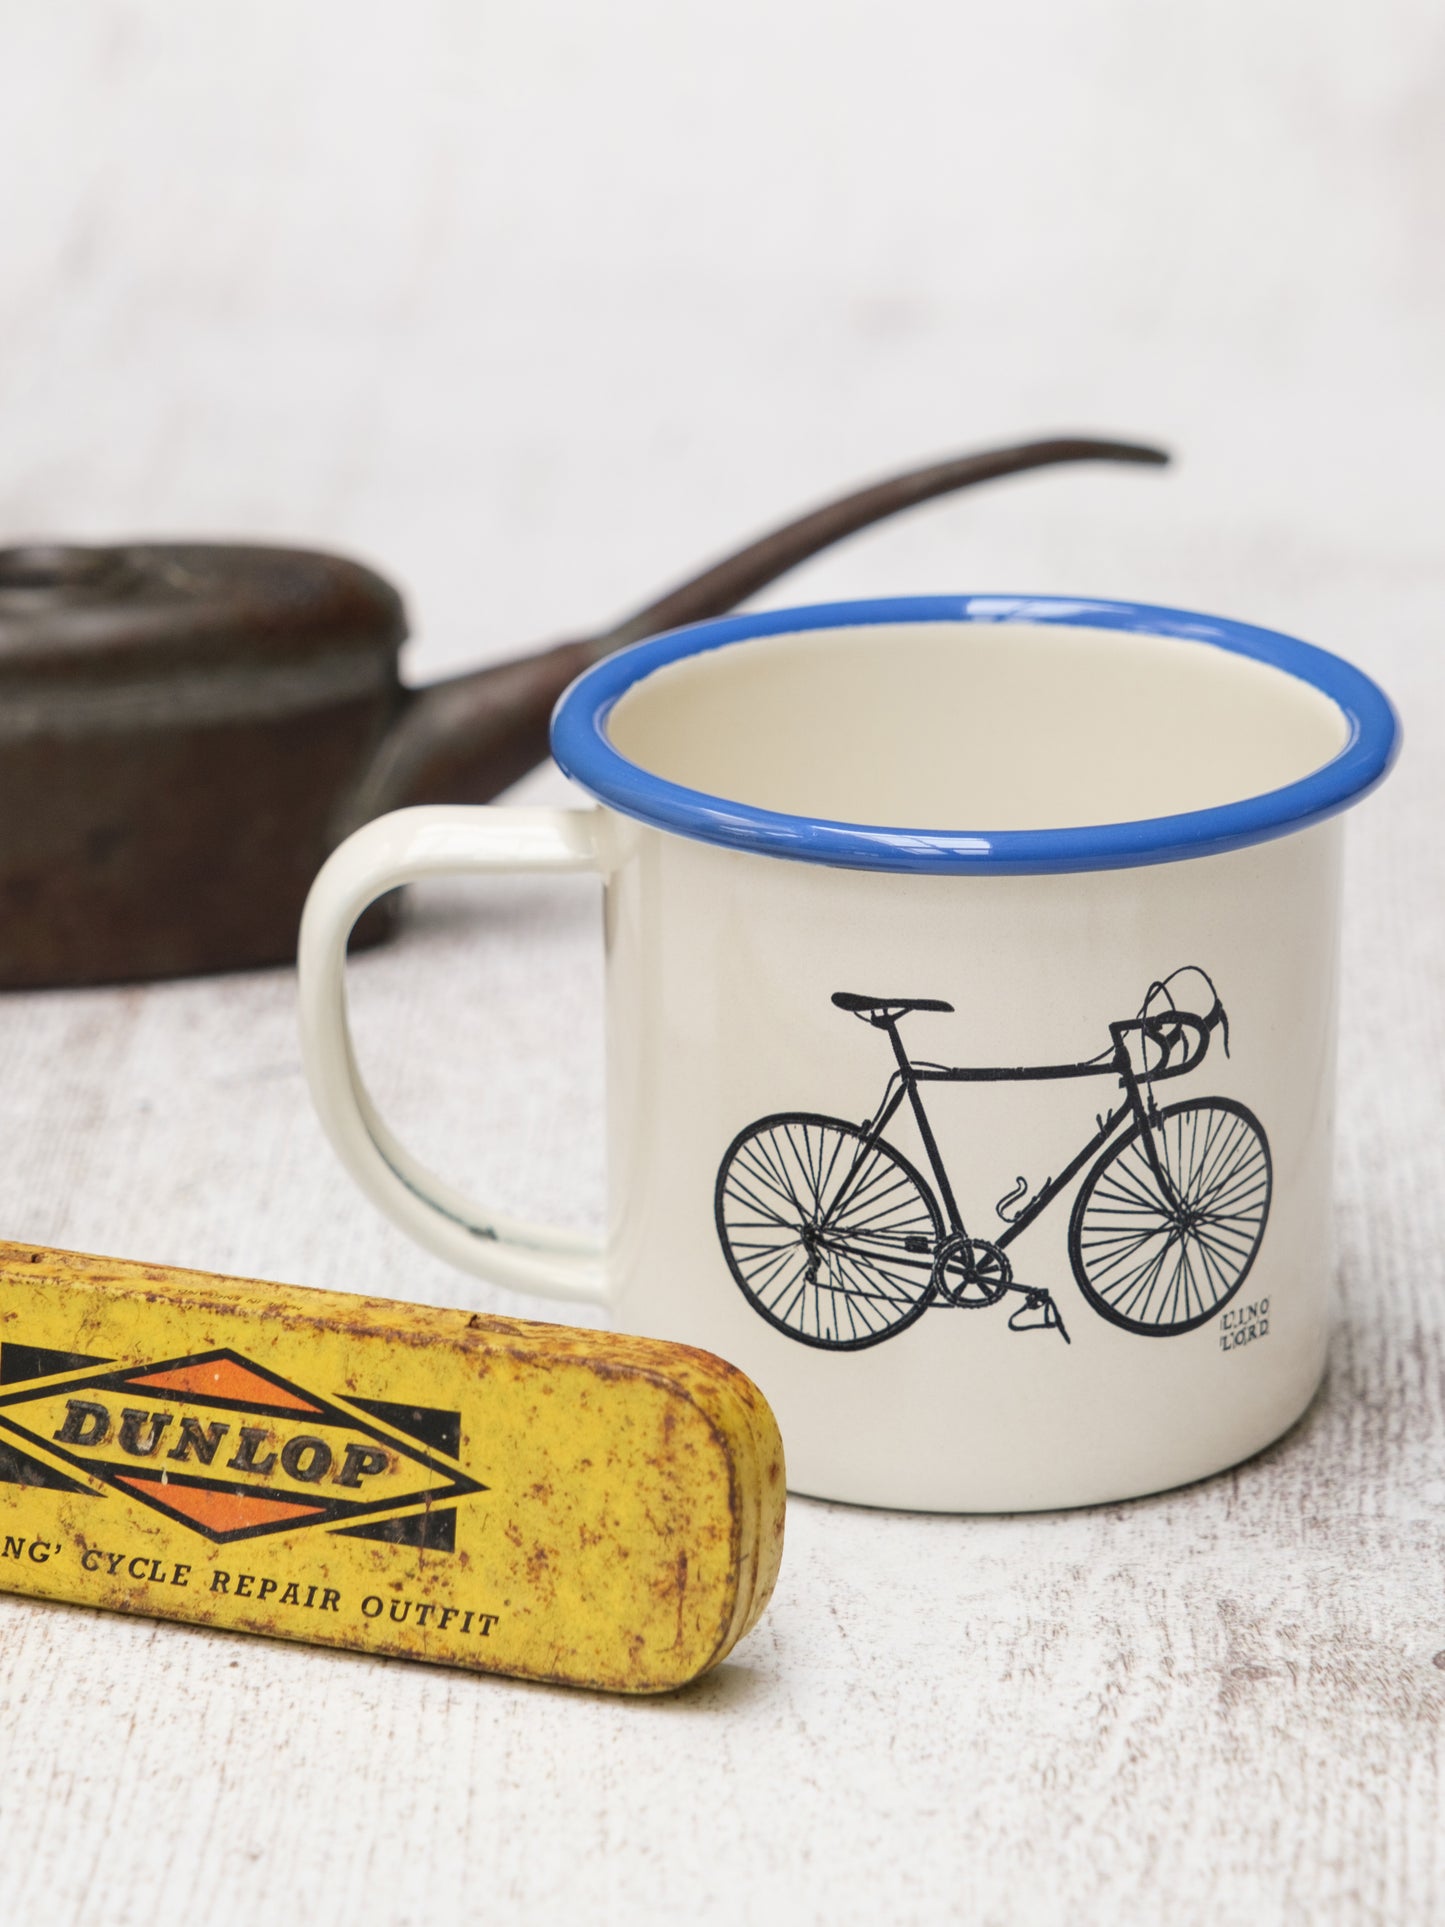 Cream Enamel Mug with Vintage Racing Bicycle Design